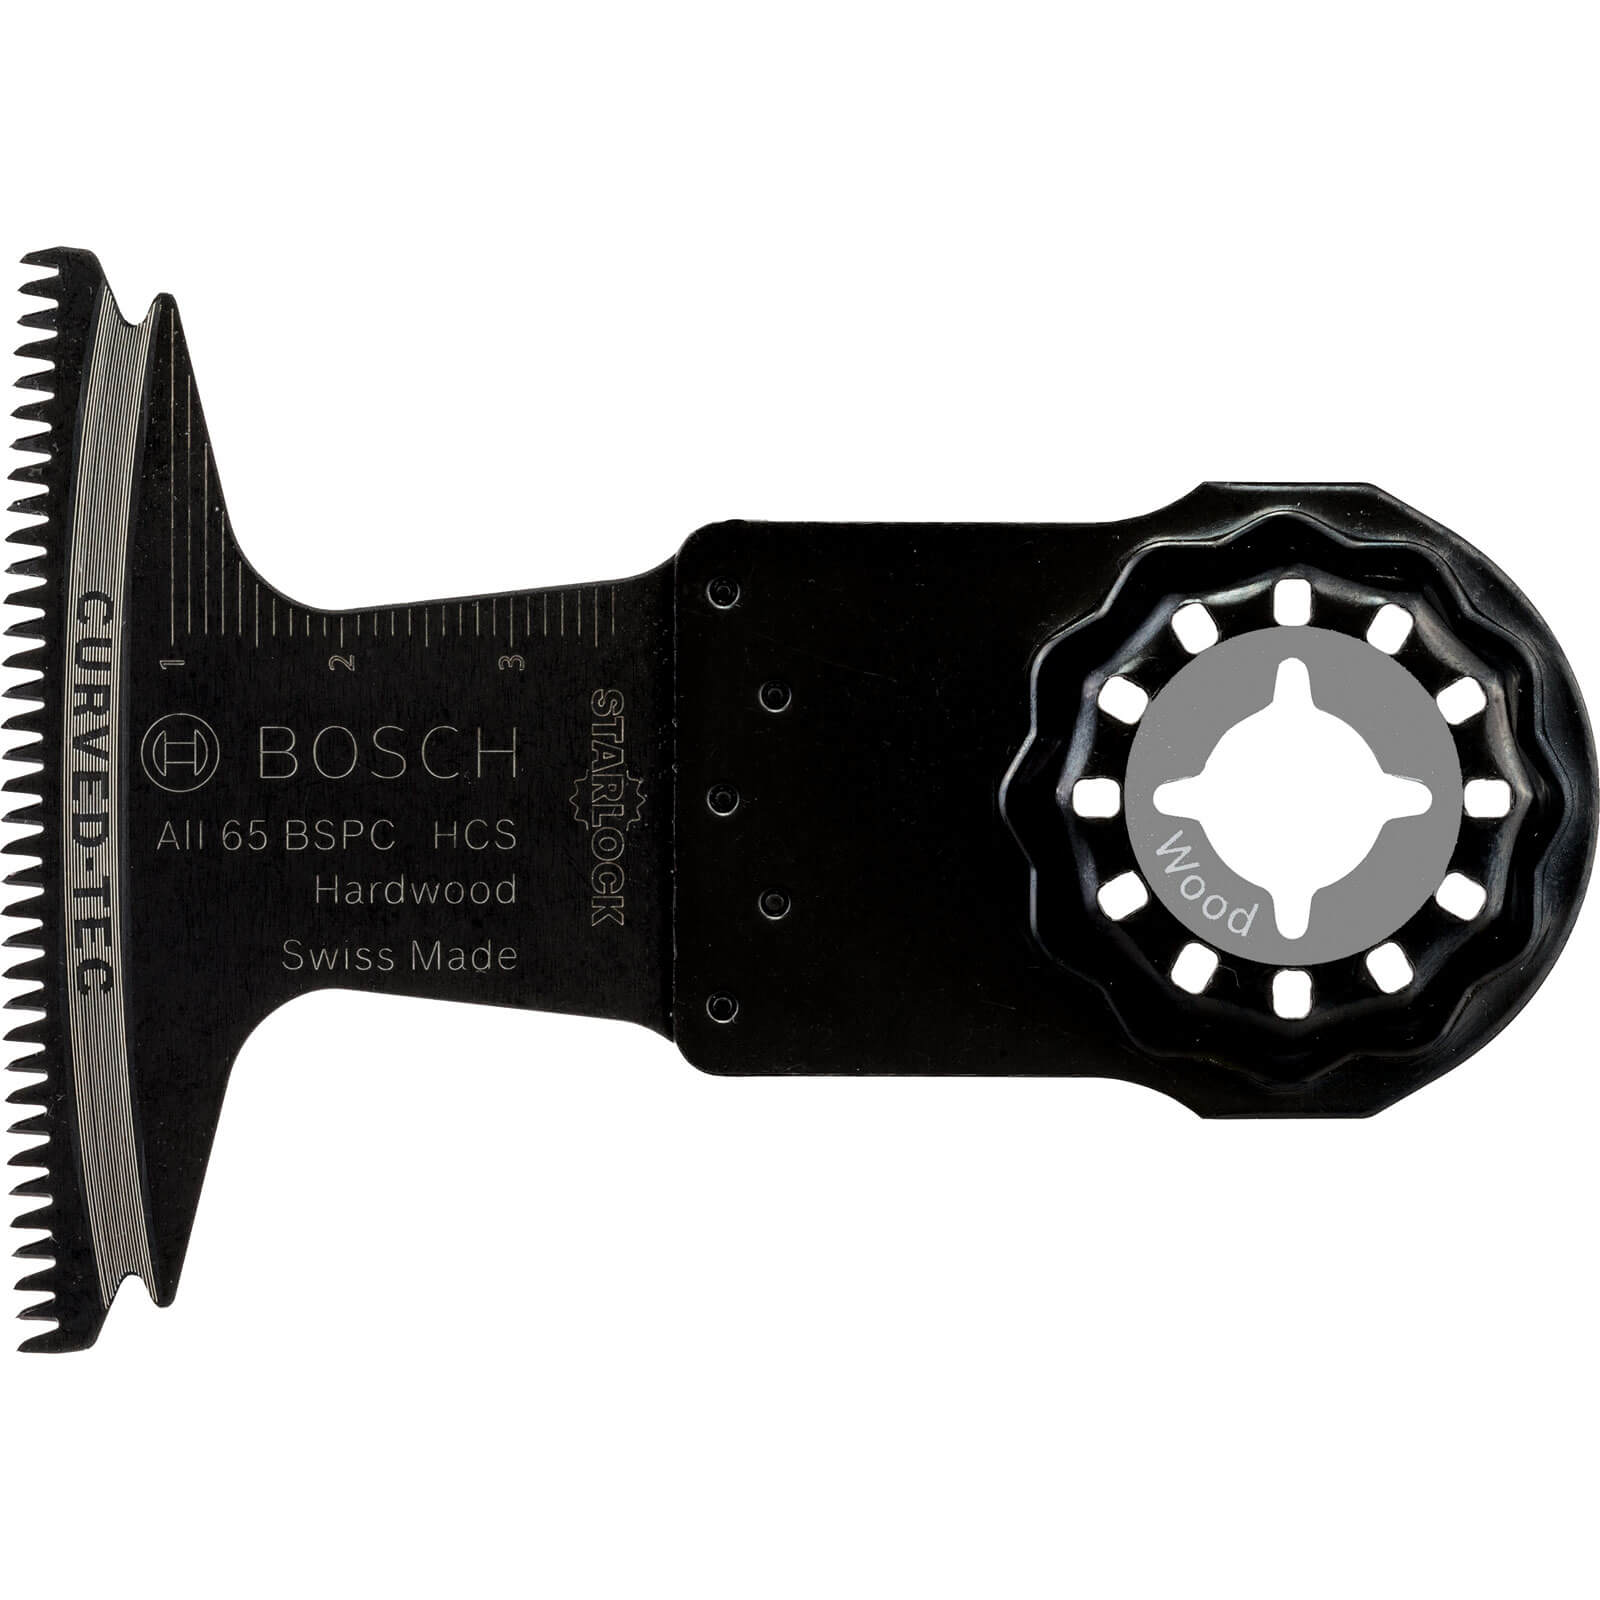 Bosch AII 65 BSPC HCS Hard Wood Starlock Oscillating Multi Tool Plunge Saw Blade 65mm Pack of 5